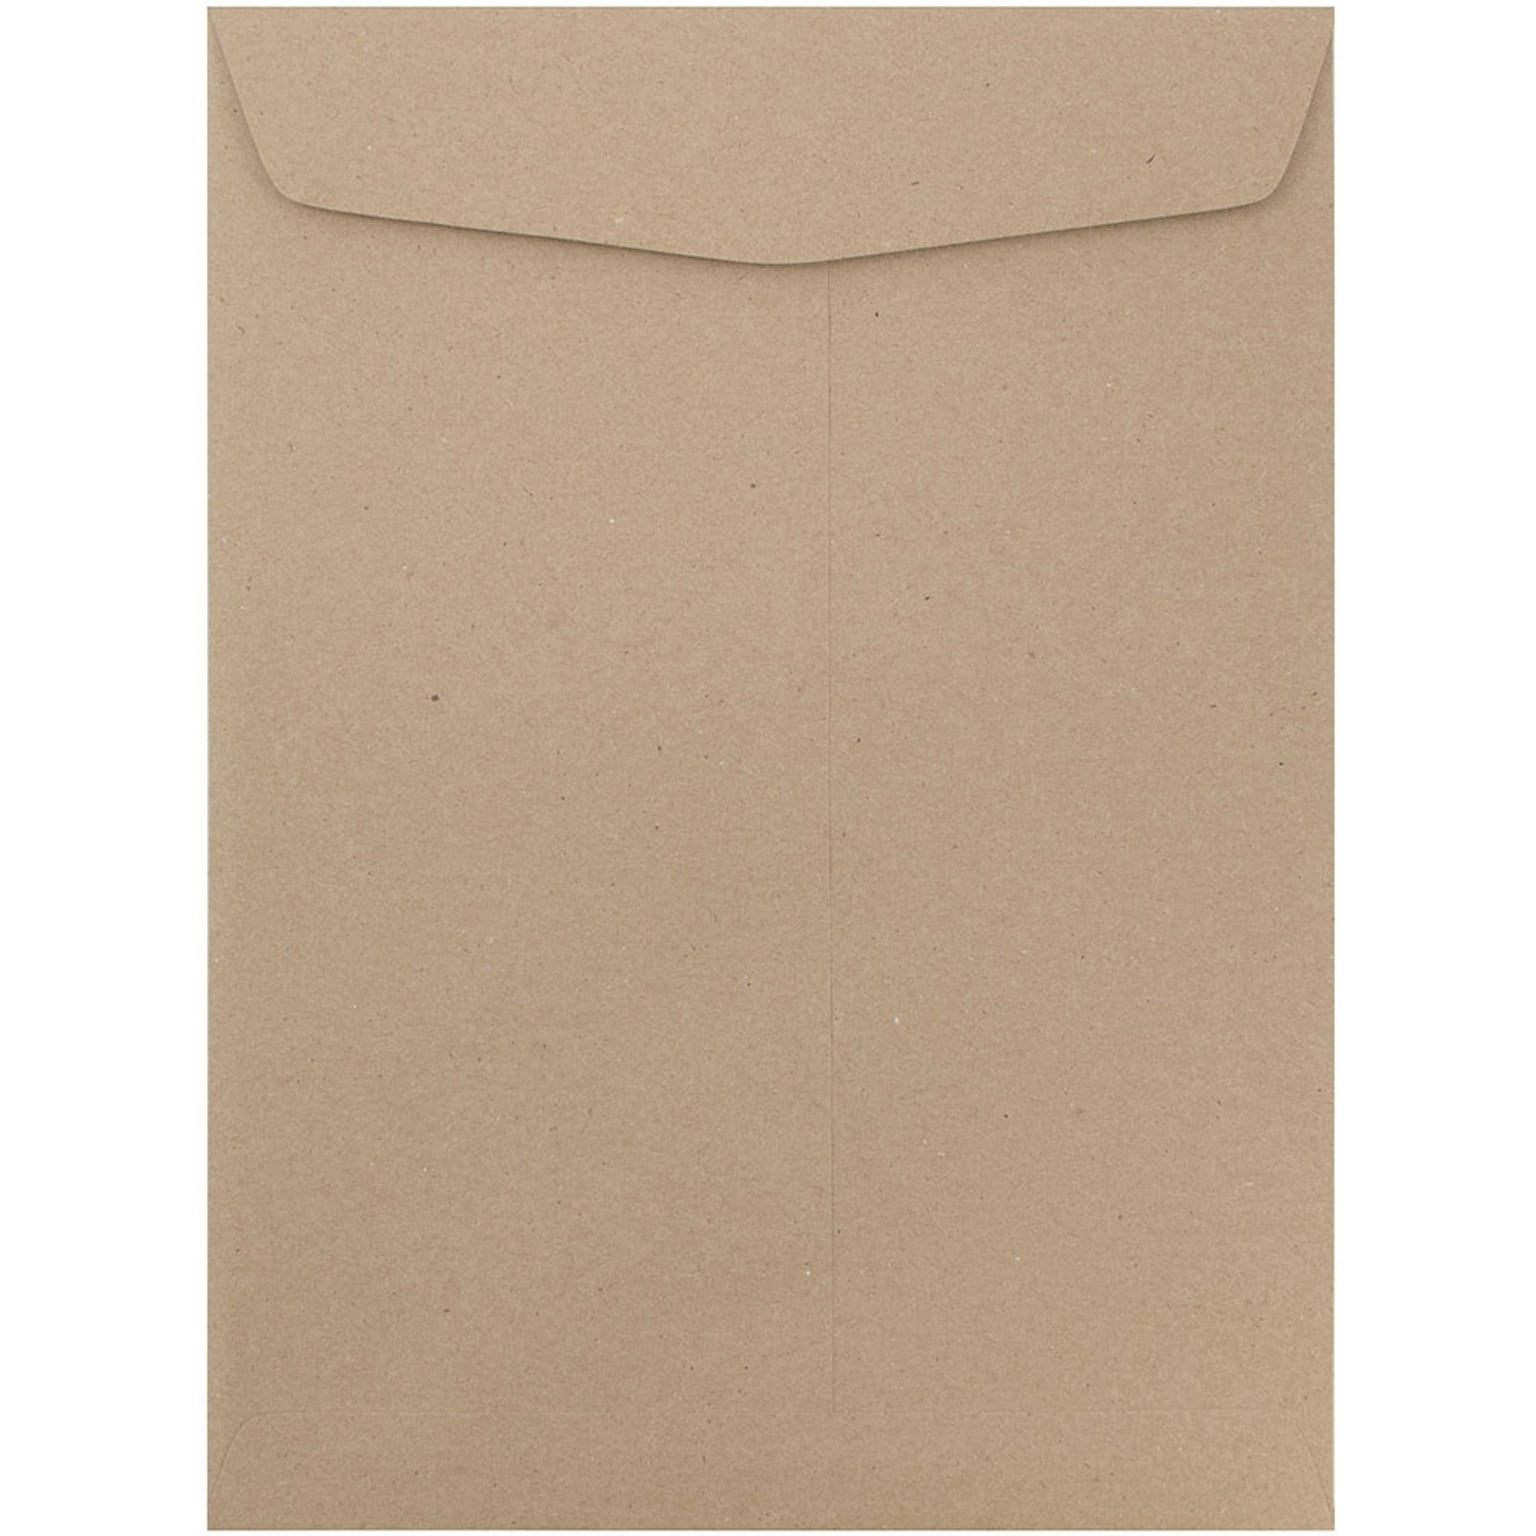 JAM Paper® 10 x 13 Open End Catalog Envelopes, Brown Kraft Paper Bag, 500/Pack (6315603C)